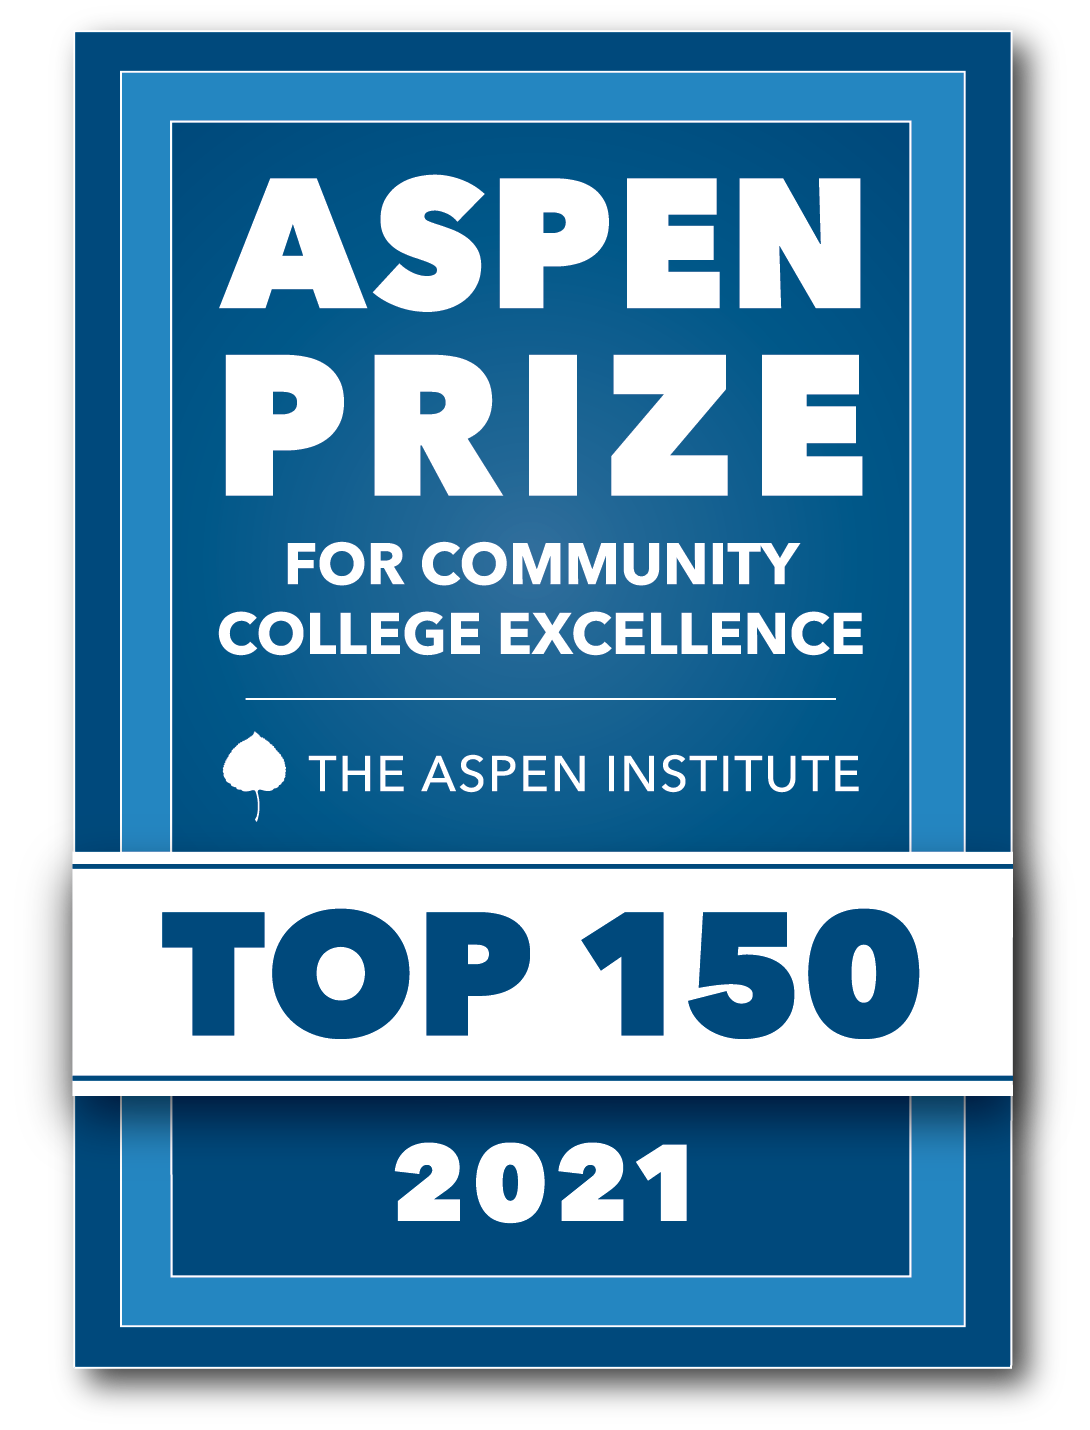 image of Aspen Prize logo